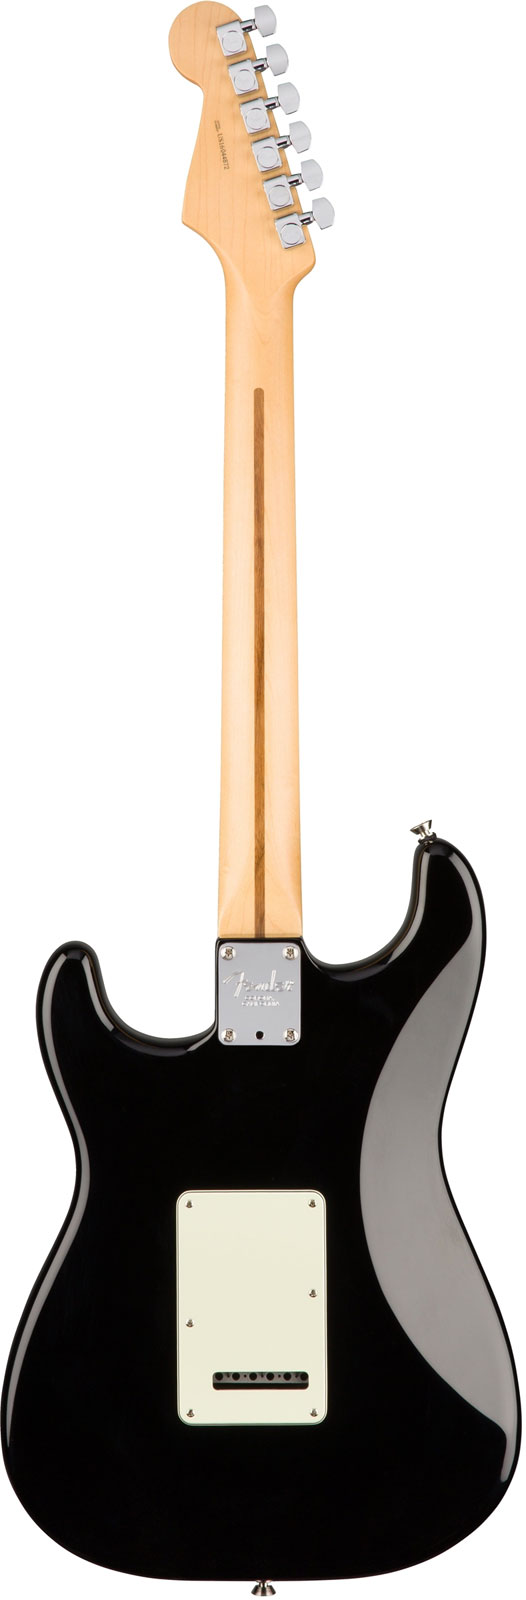 Fender Strat American Professional 2017 3s Usa Mn - Black - Guitare Électrique Forme Str - Variation 2